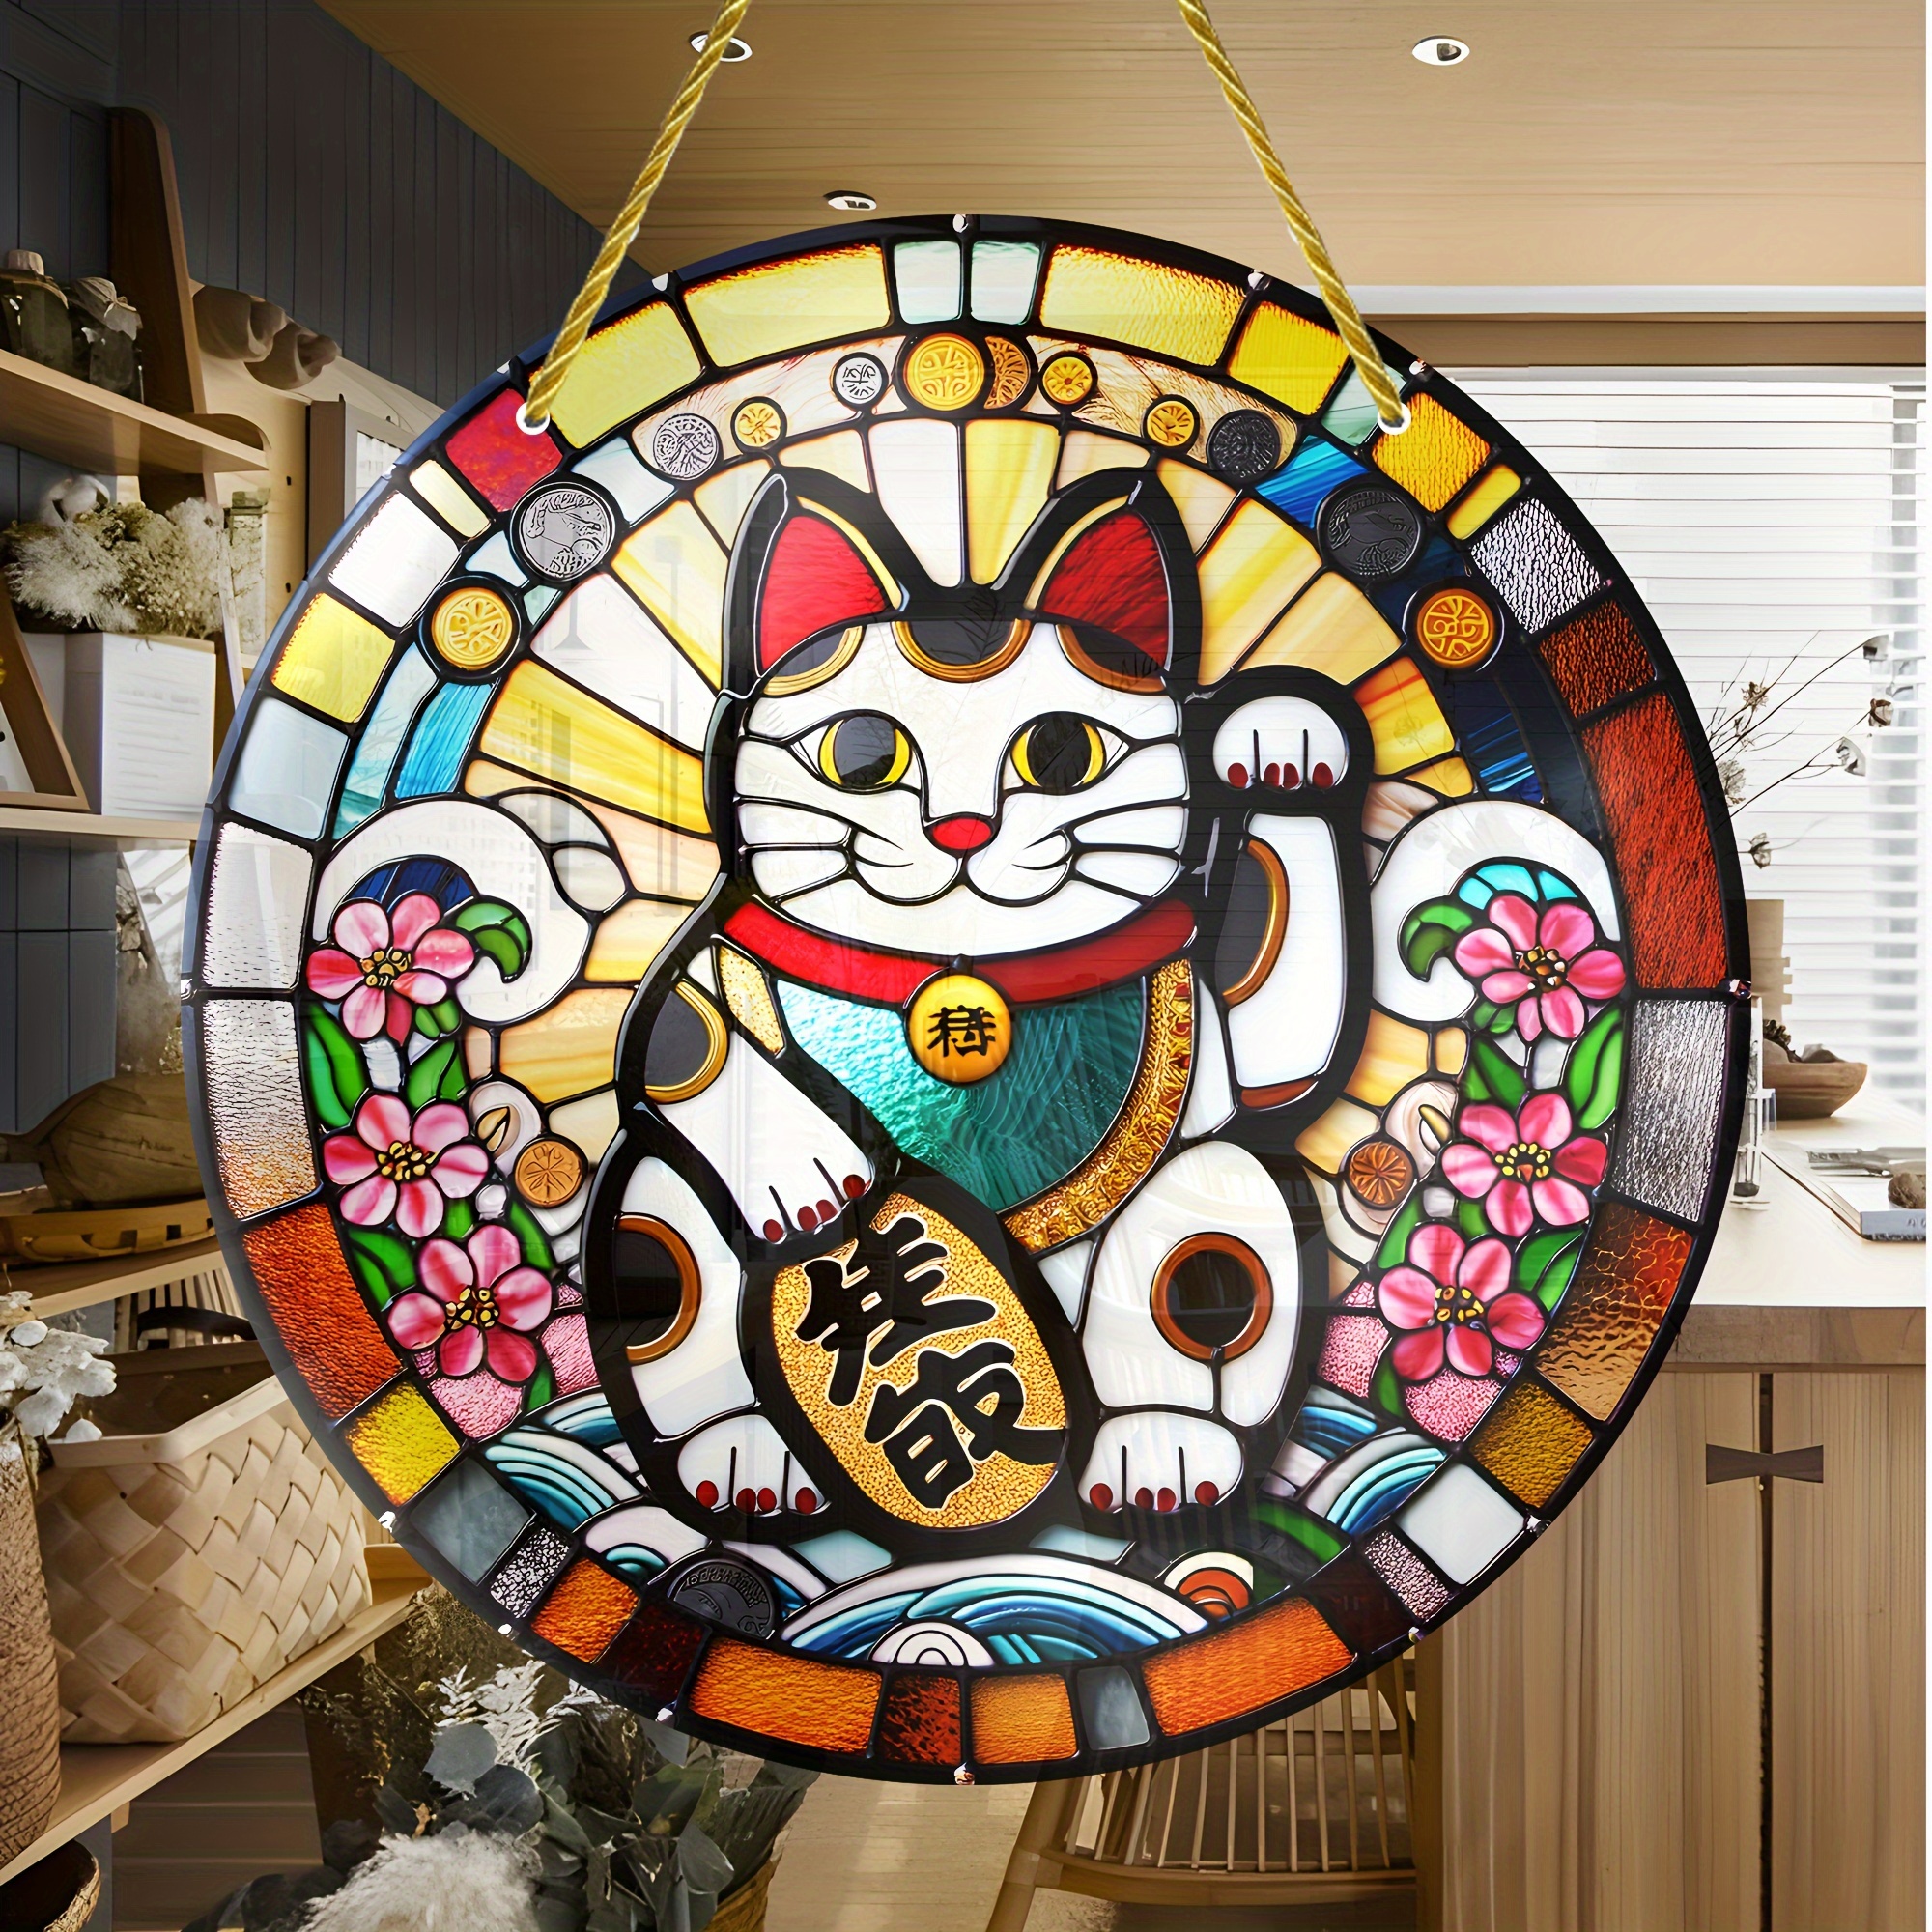 

Lucky Cat Stained Glass Suncatcher - 8 Inch Round Maneki Neko Window Hangings - Housewarming Gift For Home Decor, Unique Decorative Art For Indoor Outdoor Wall, Garden, Patio, Office, Birthday Present